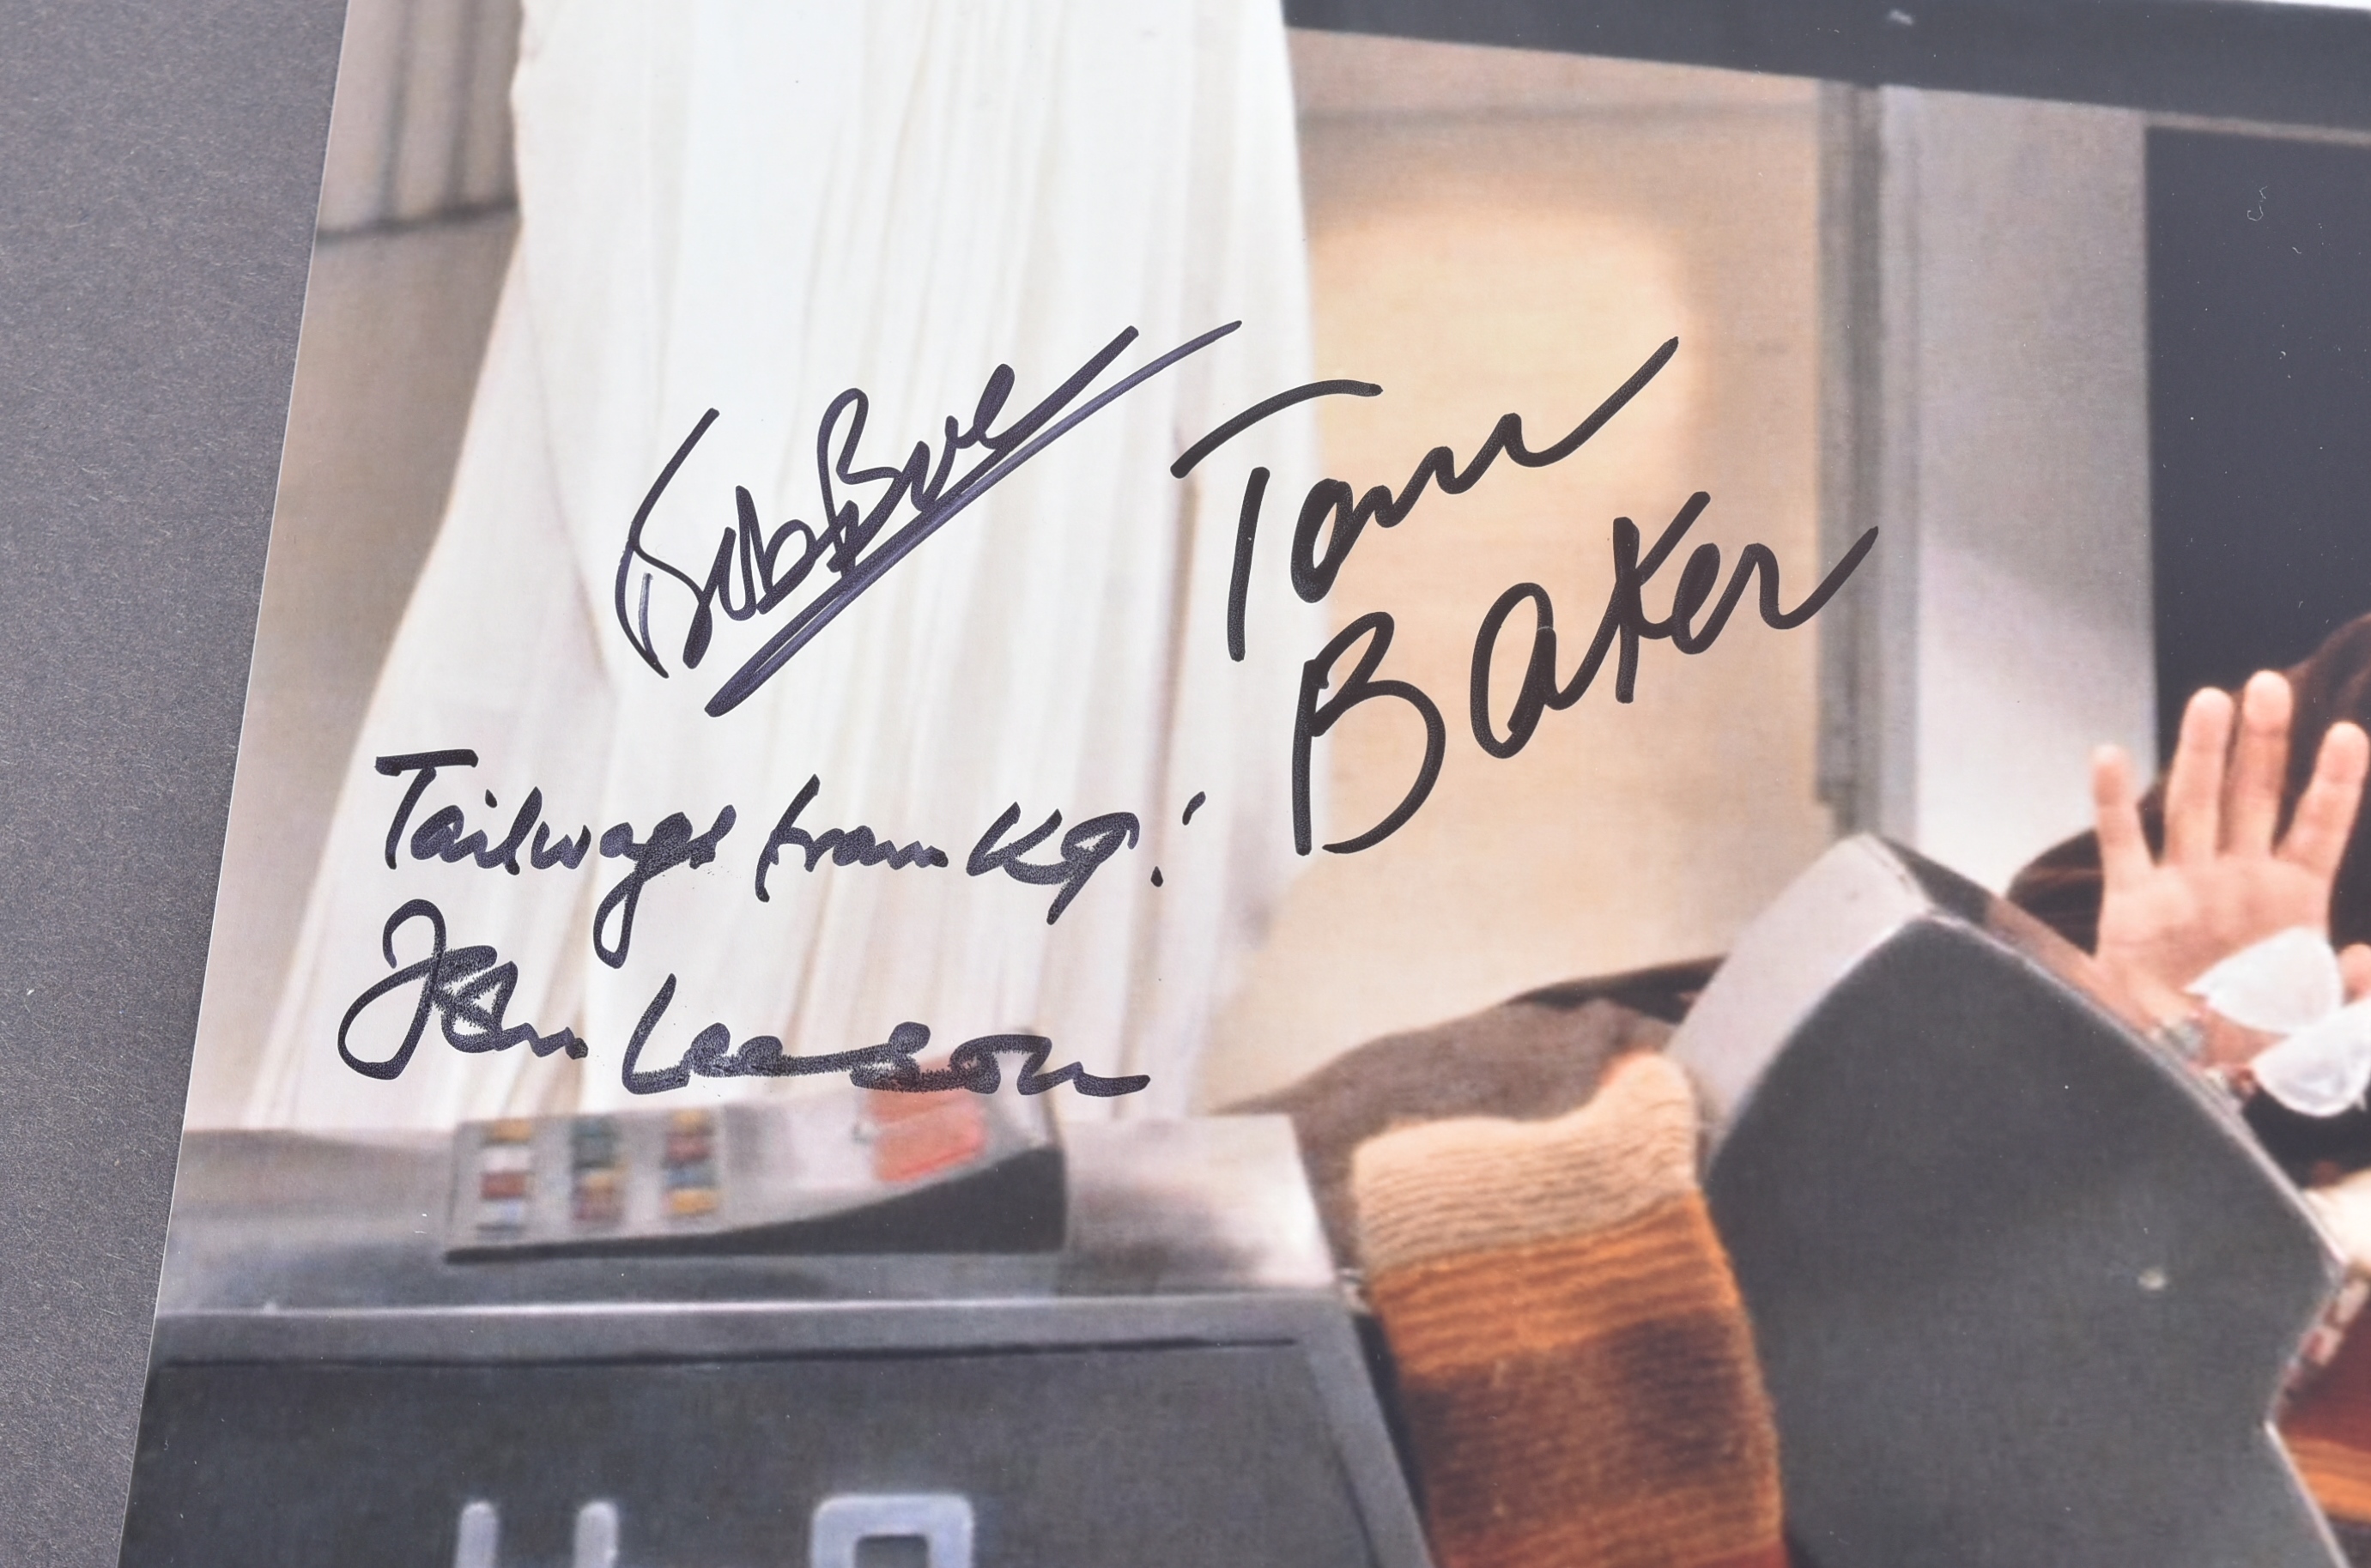 DOCTOR WHO - TOM BAKER, BOB BAKER & LEESON - SIGNED 16X12" PHOTO - Image 2 of 2